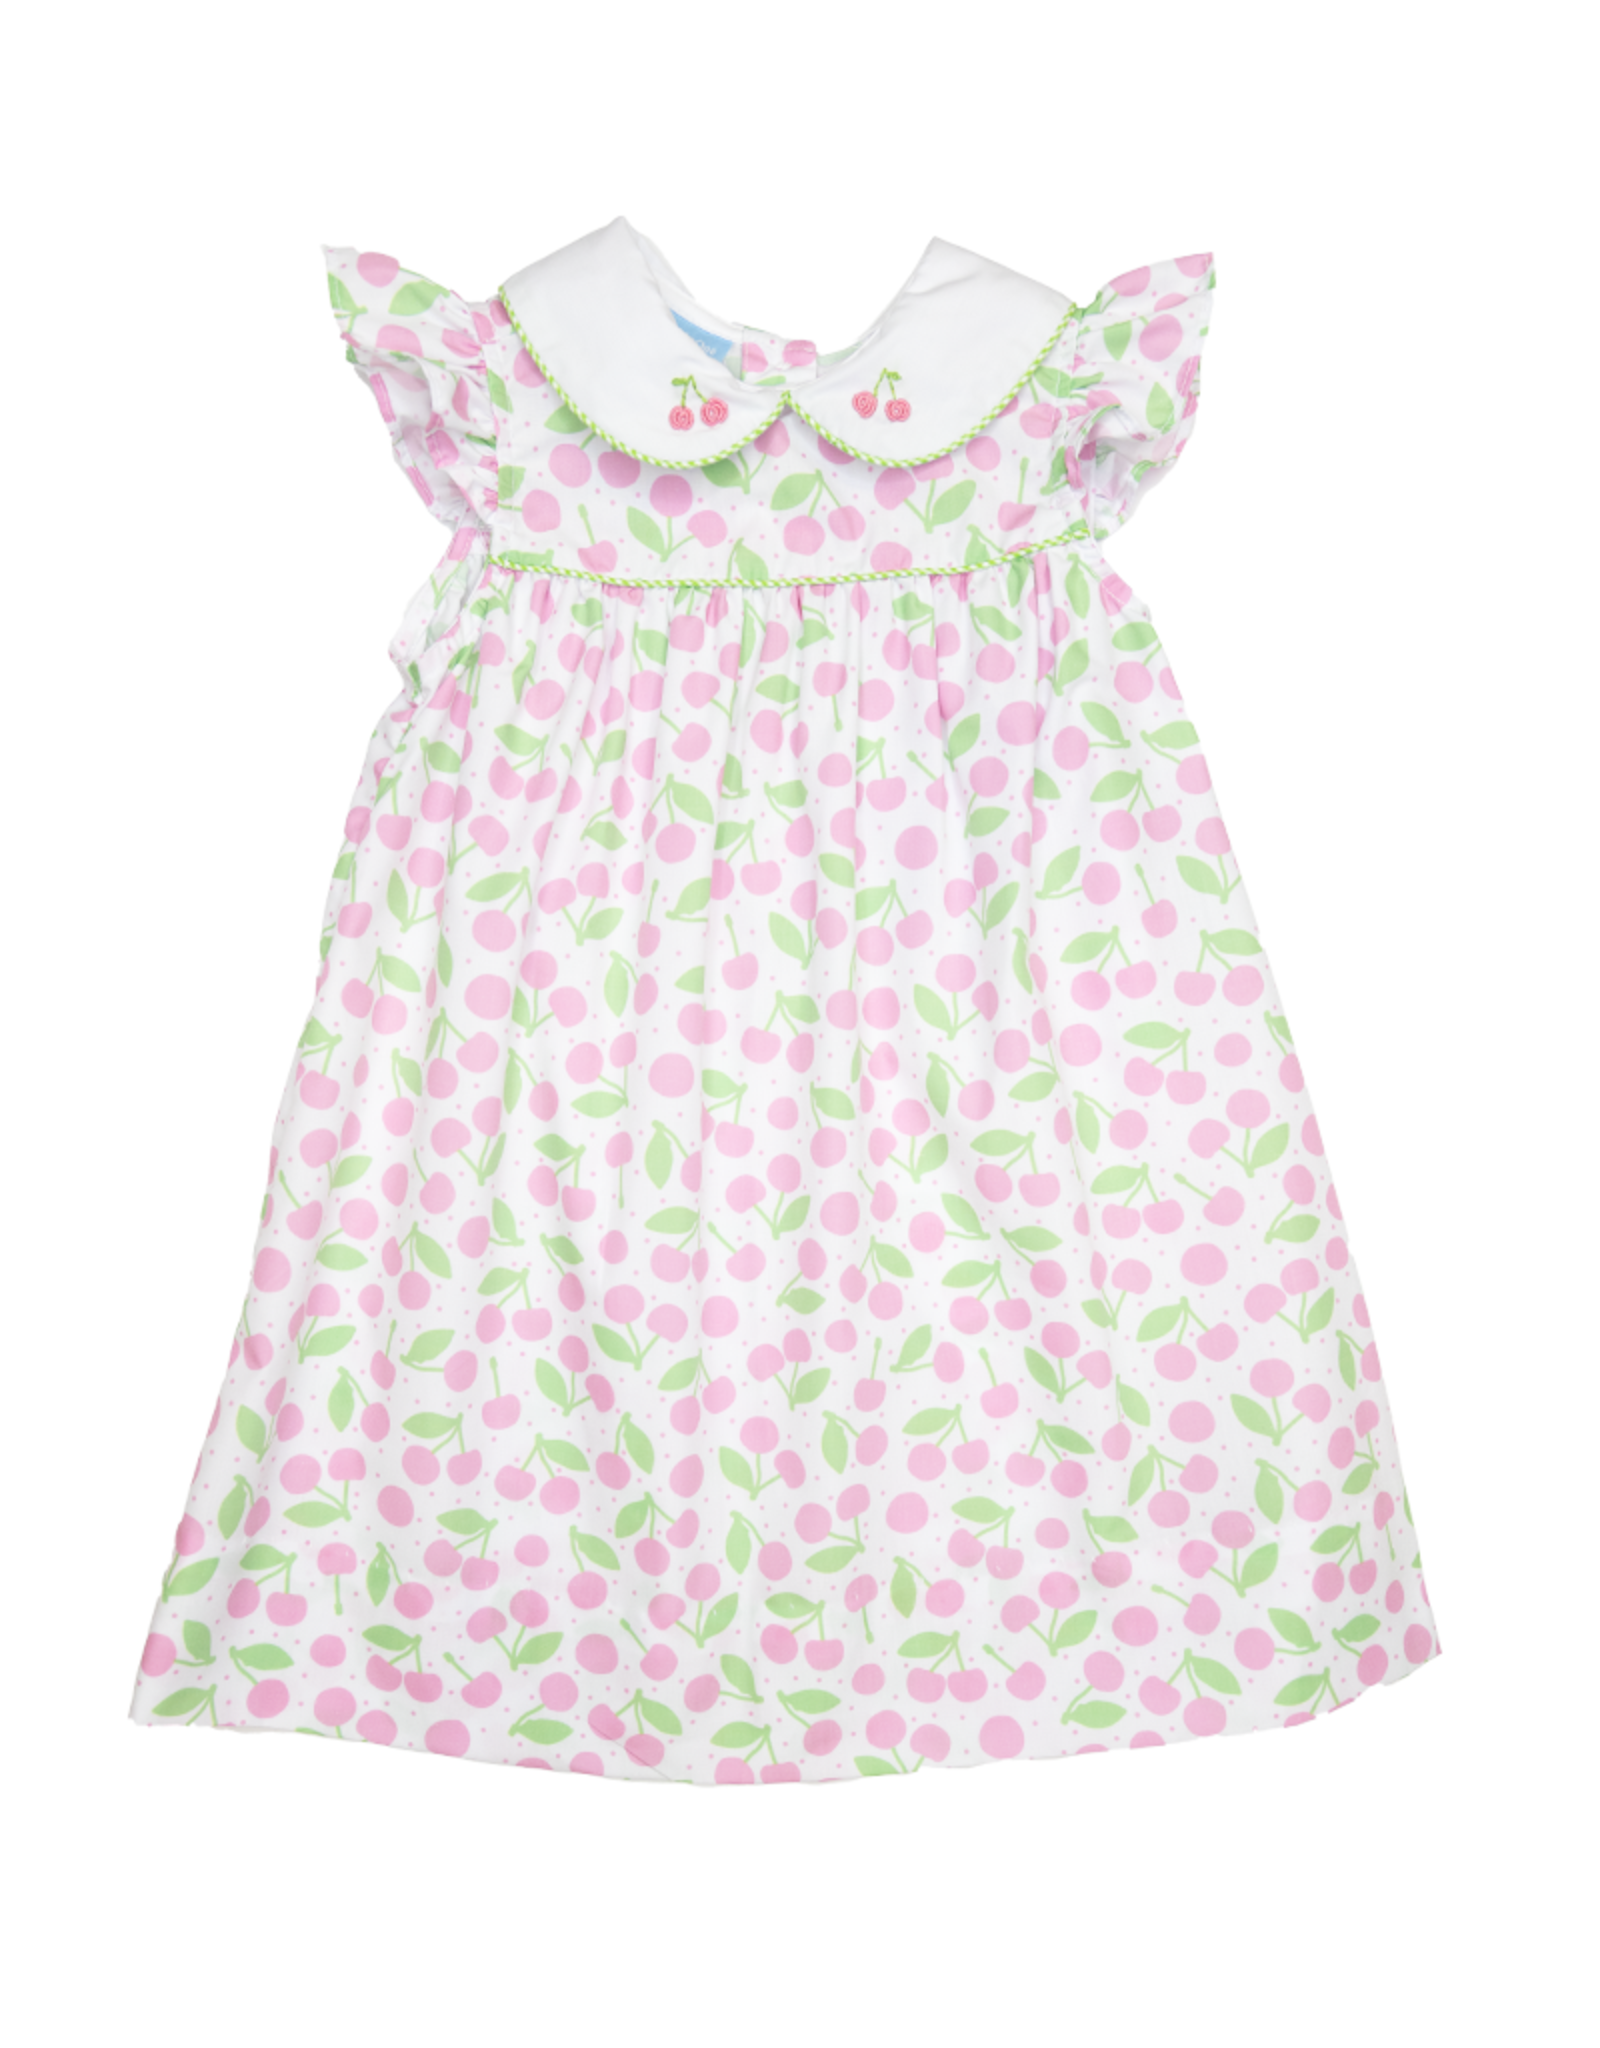 Charming Little One GQ0992 Cherry Blossom Dress